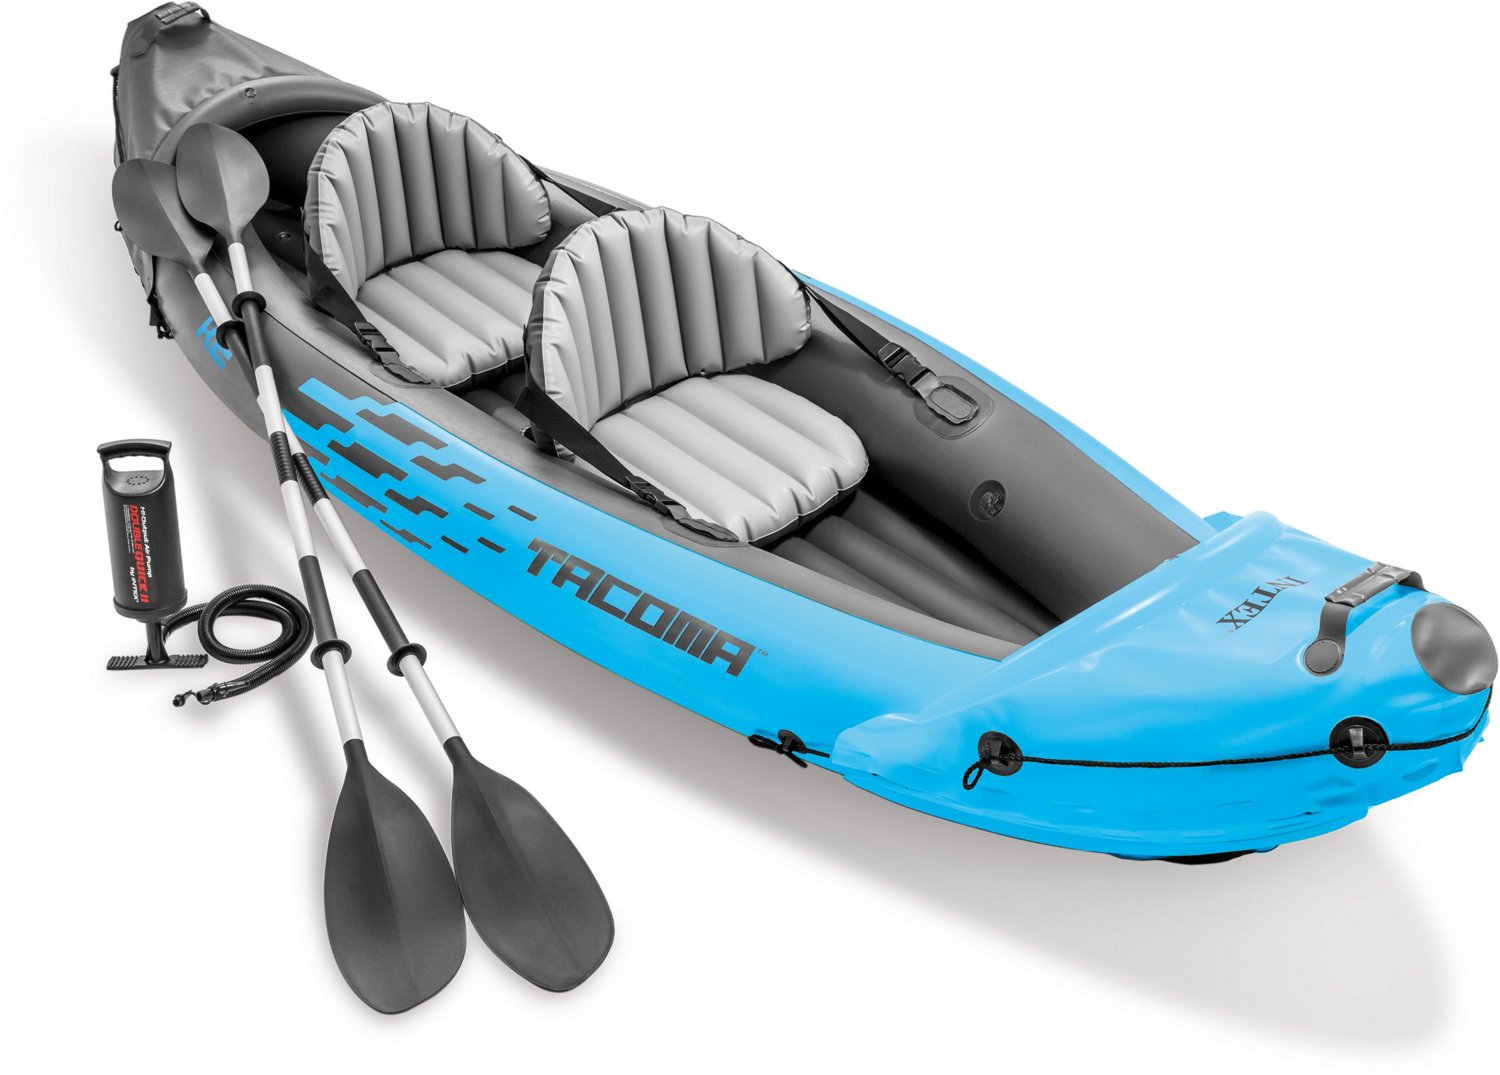 INTEX Sport Series Tacoma K2 10 ft 3 in Inflatable Tandem Kayak